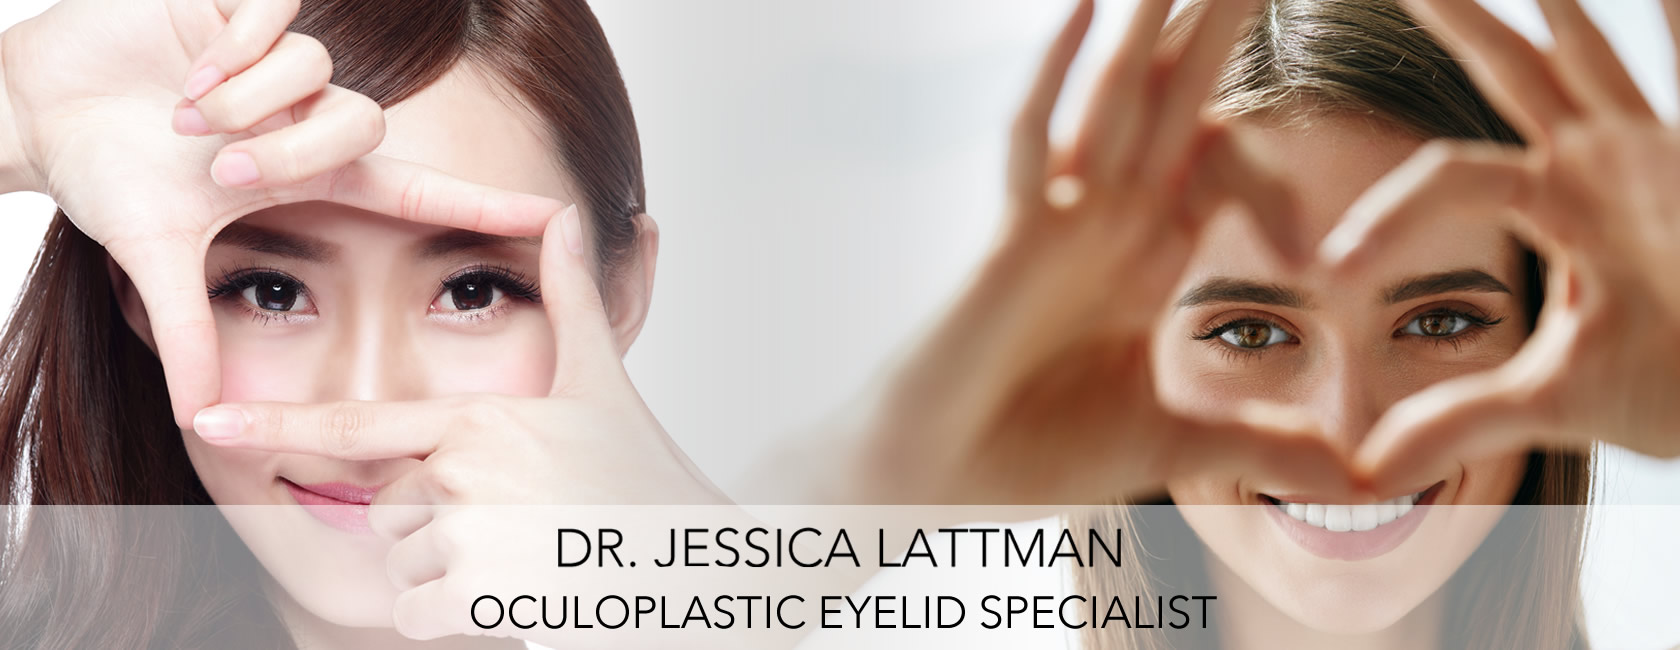 Oculoplastic Surgeon Dr. Jessica Lattman NYC